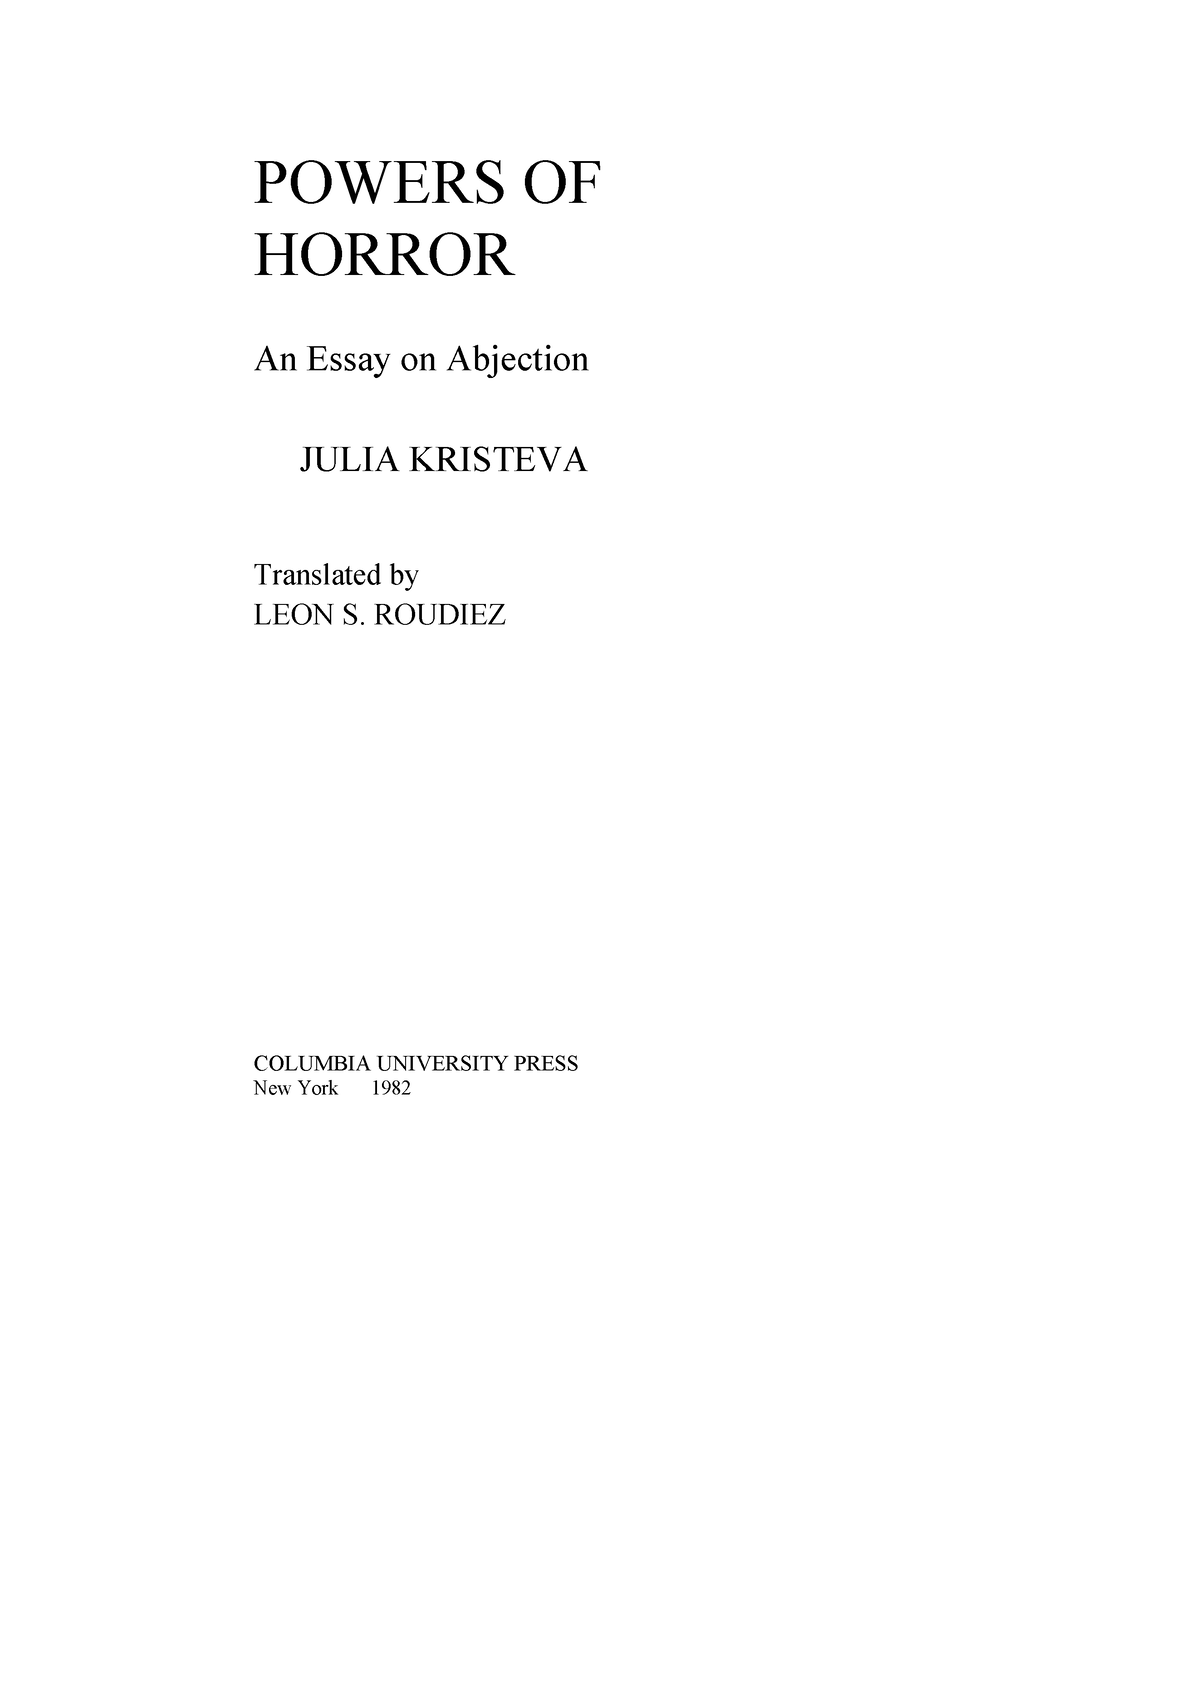 julia kristeva powers of horror an essay on abjection pdf